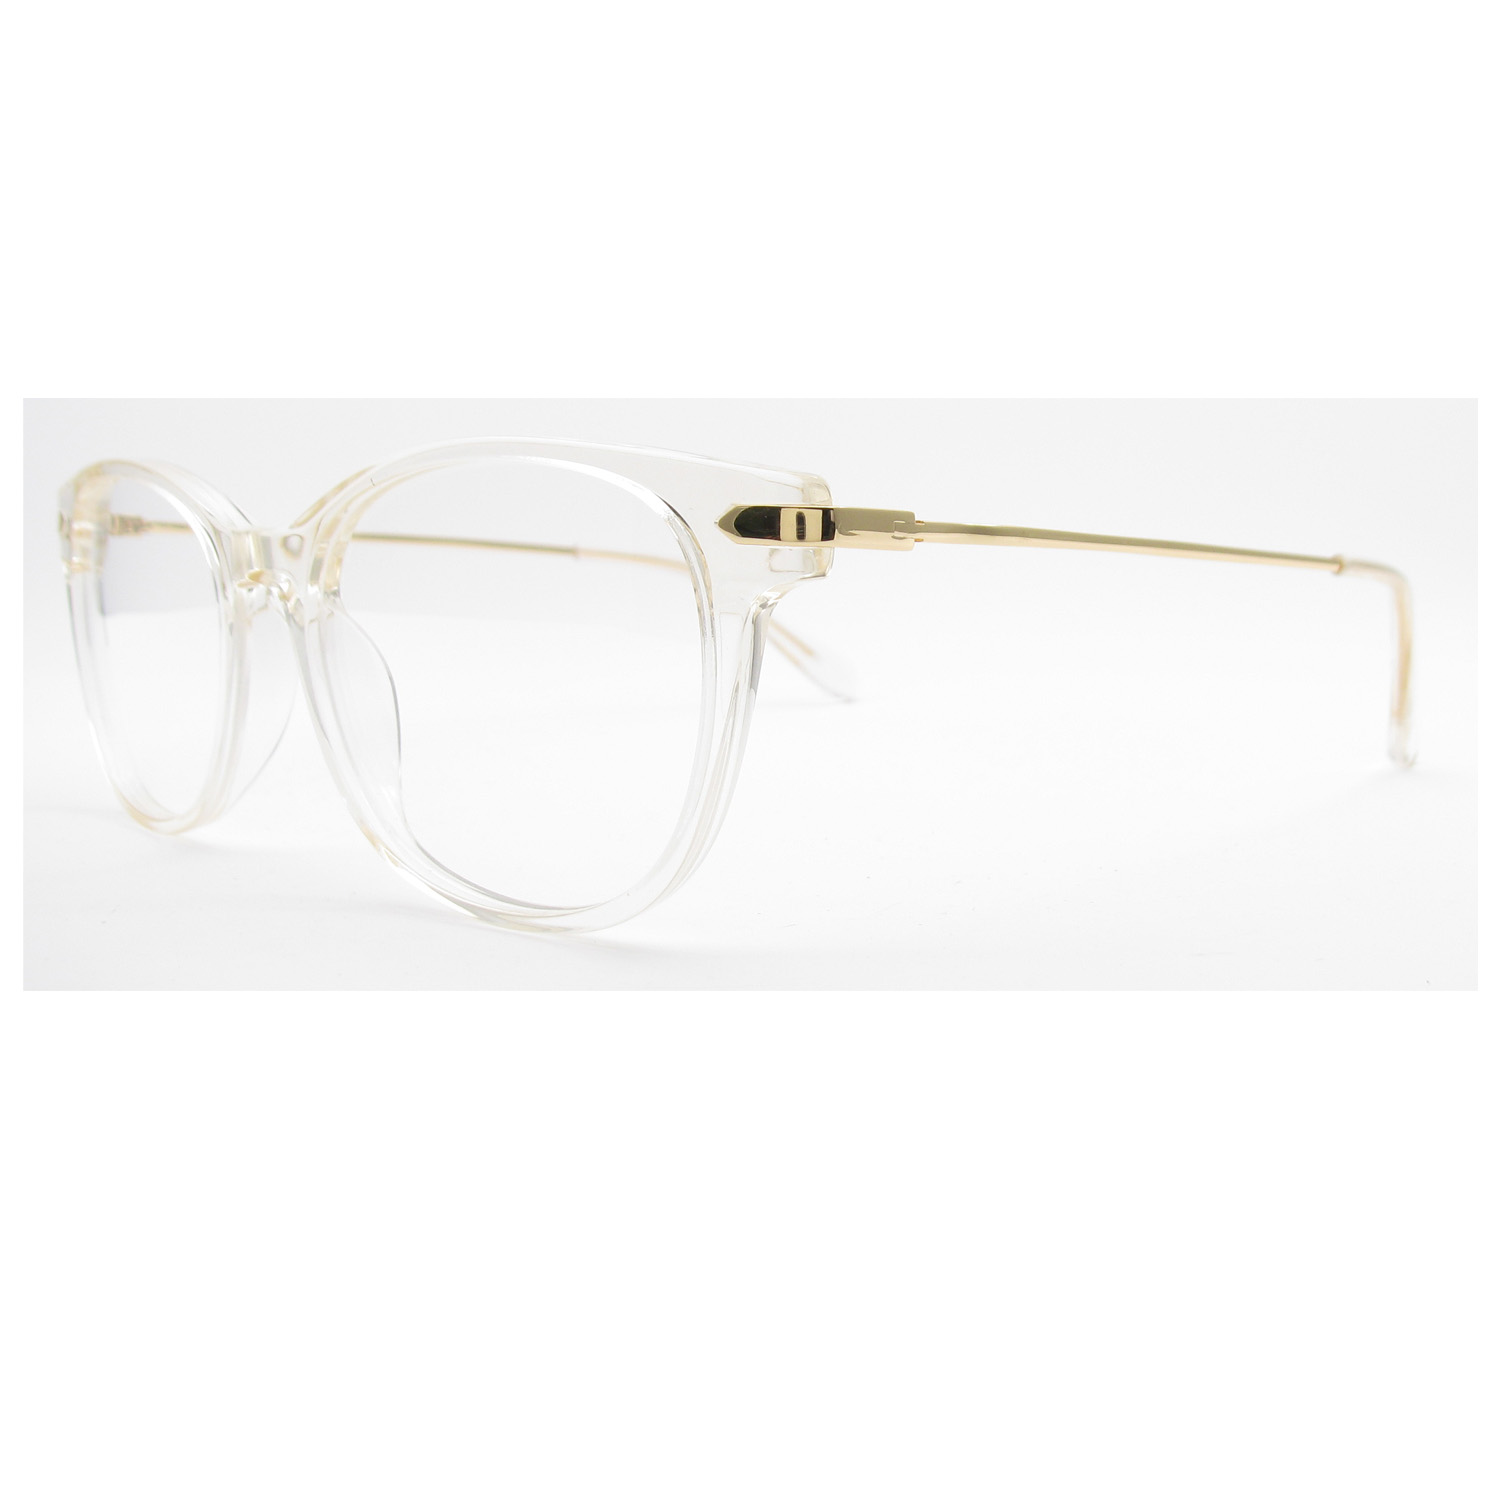 Walmart Women's Rx'able Eyeglasses, Wop69, Crystal Gold, 51-17-145 - image 3 of 7